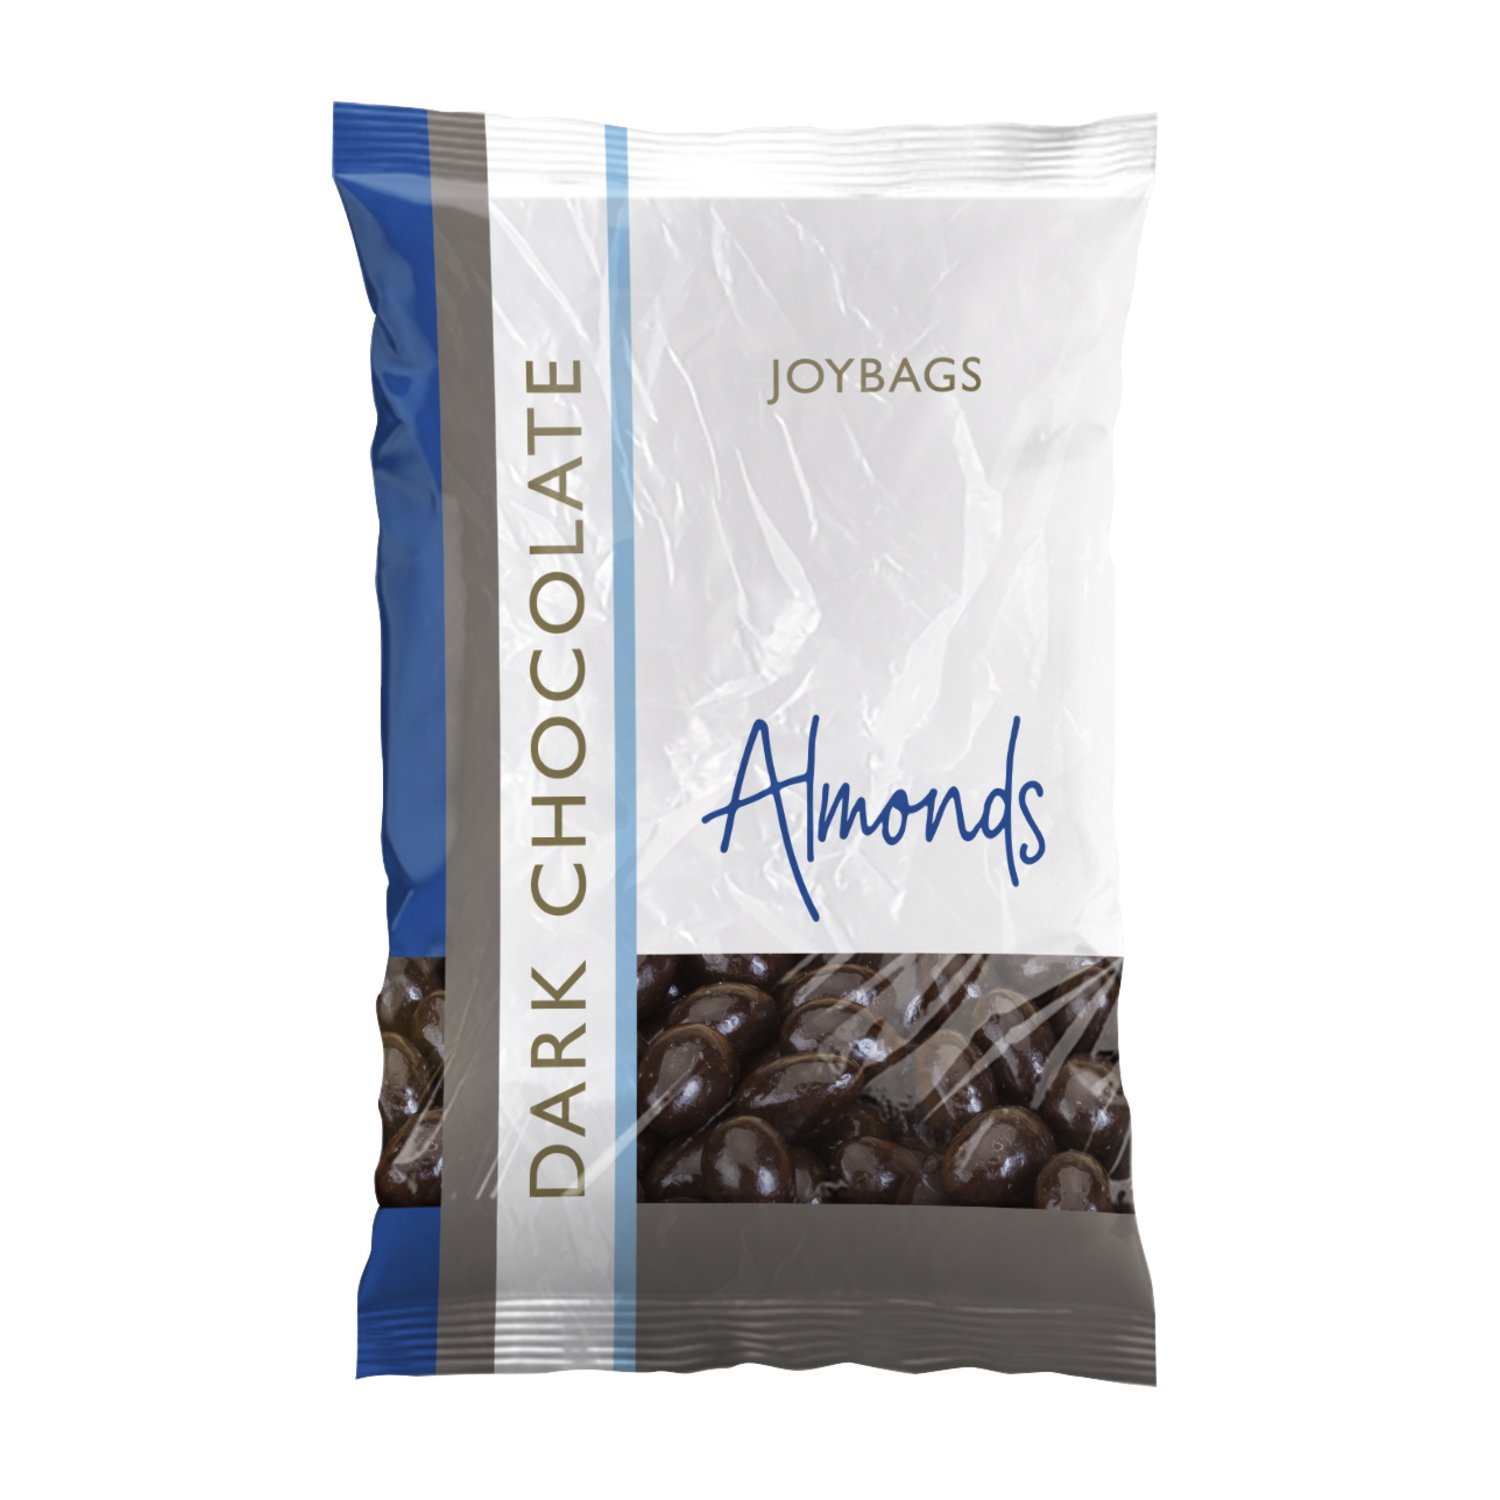 Joybags dark chocolate covered almonds - 15x100g